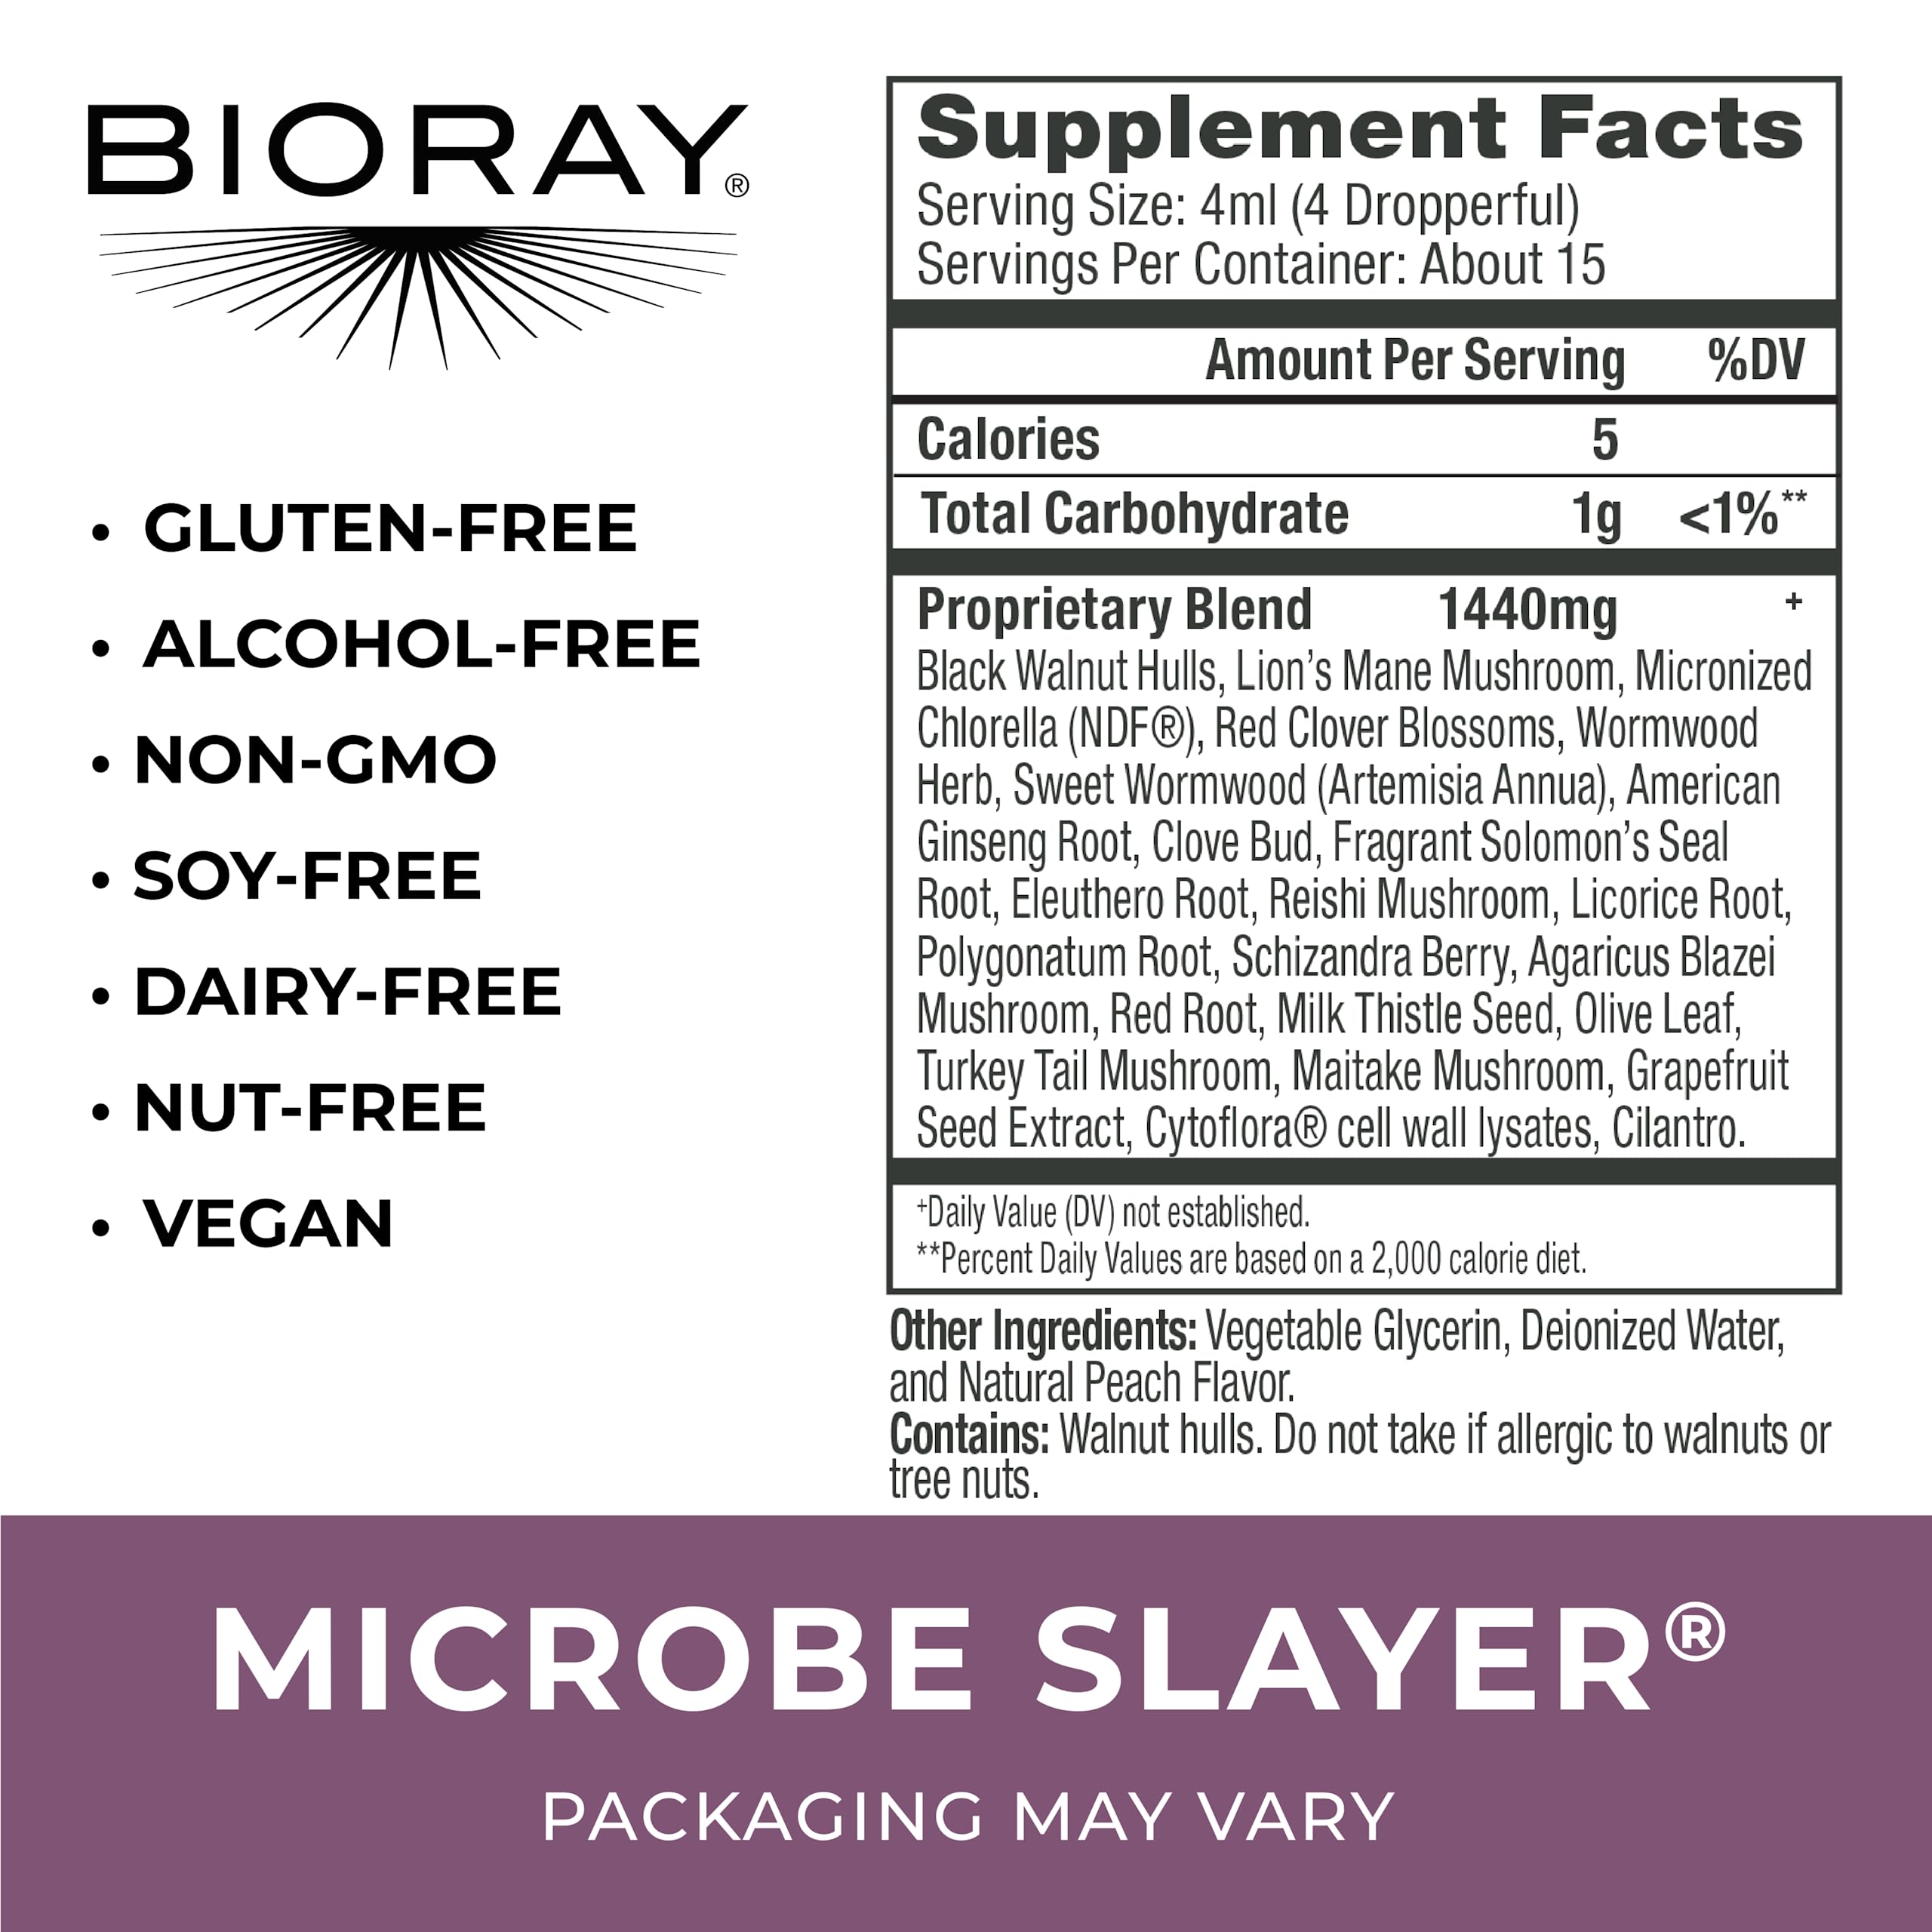 BIORAY Daily Microbe Slayer - 2 fl oz - Promotes Balance of Intestinal Microbes & Nourishes The Liver - Non-GMO, Vegetarian, Gluten Free